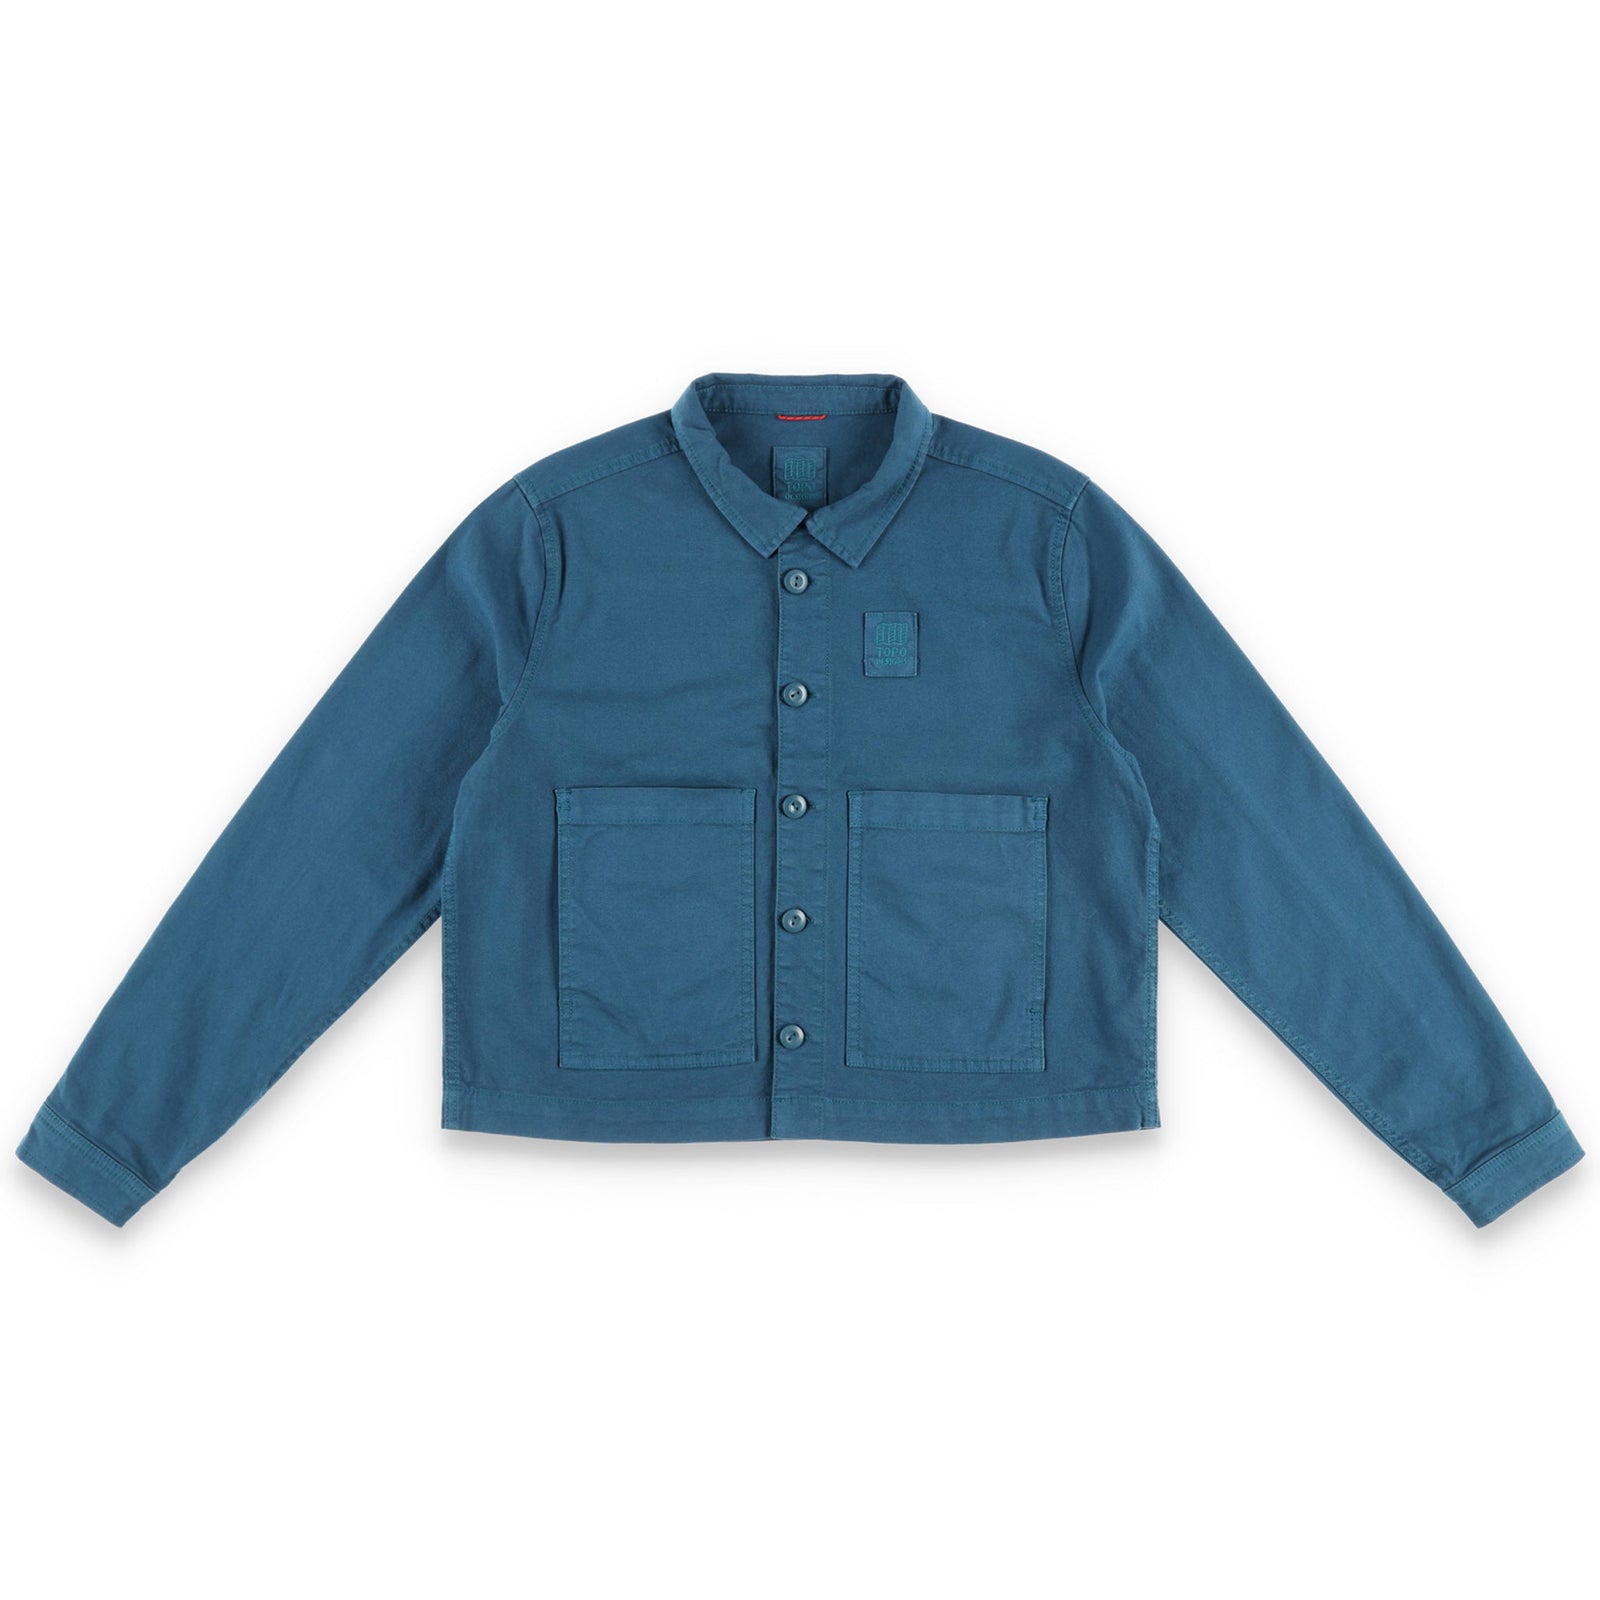 Topo Designs Women's Dirt Jacket 100% organic cotton shirt jacket in "pond blue"